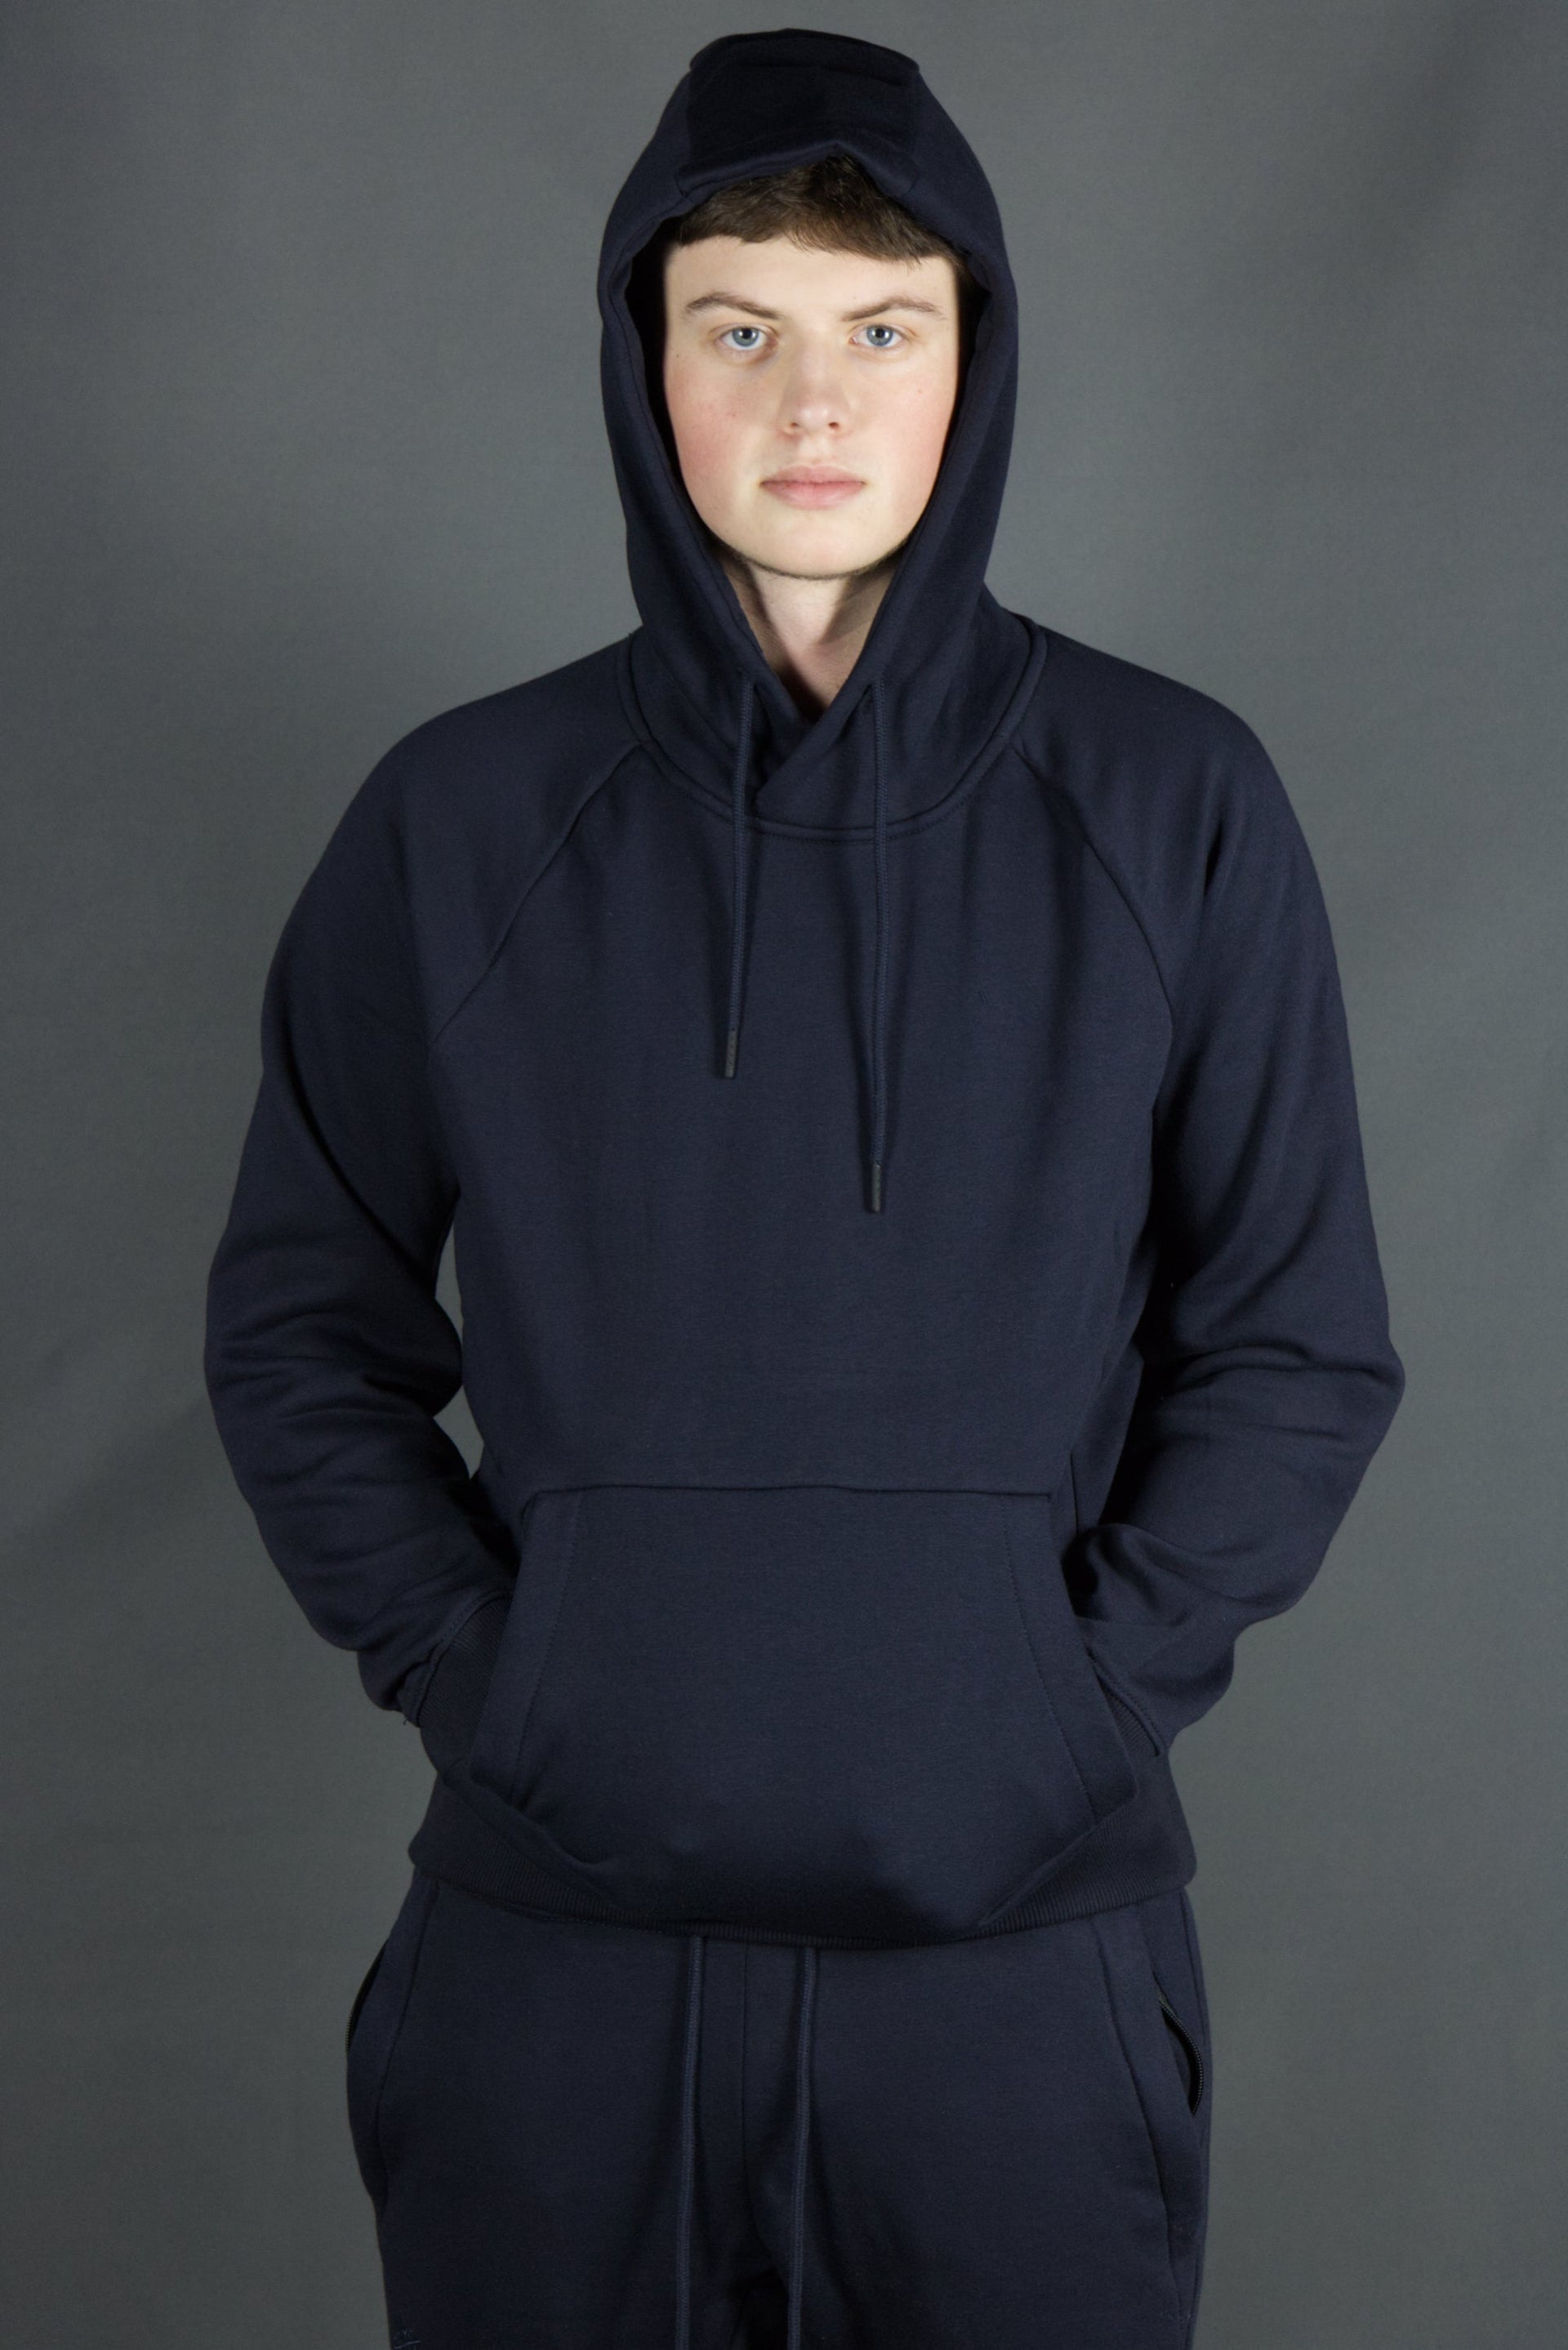 A model wearing the navy blue basic fleece pullover hoodie by Jordan Craig.